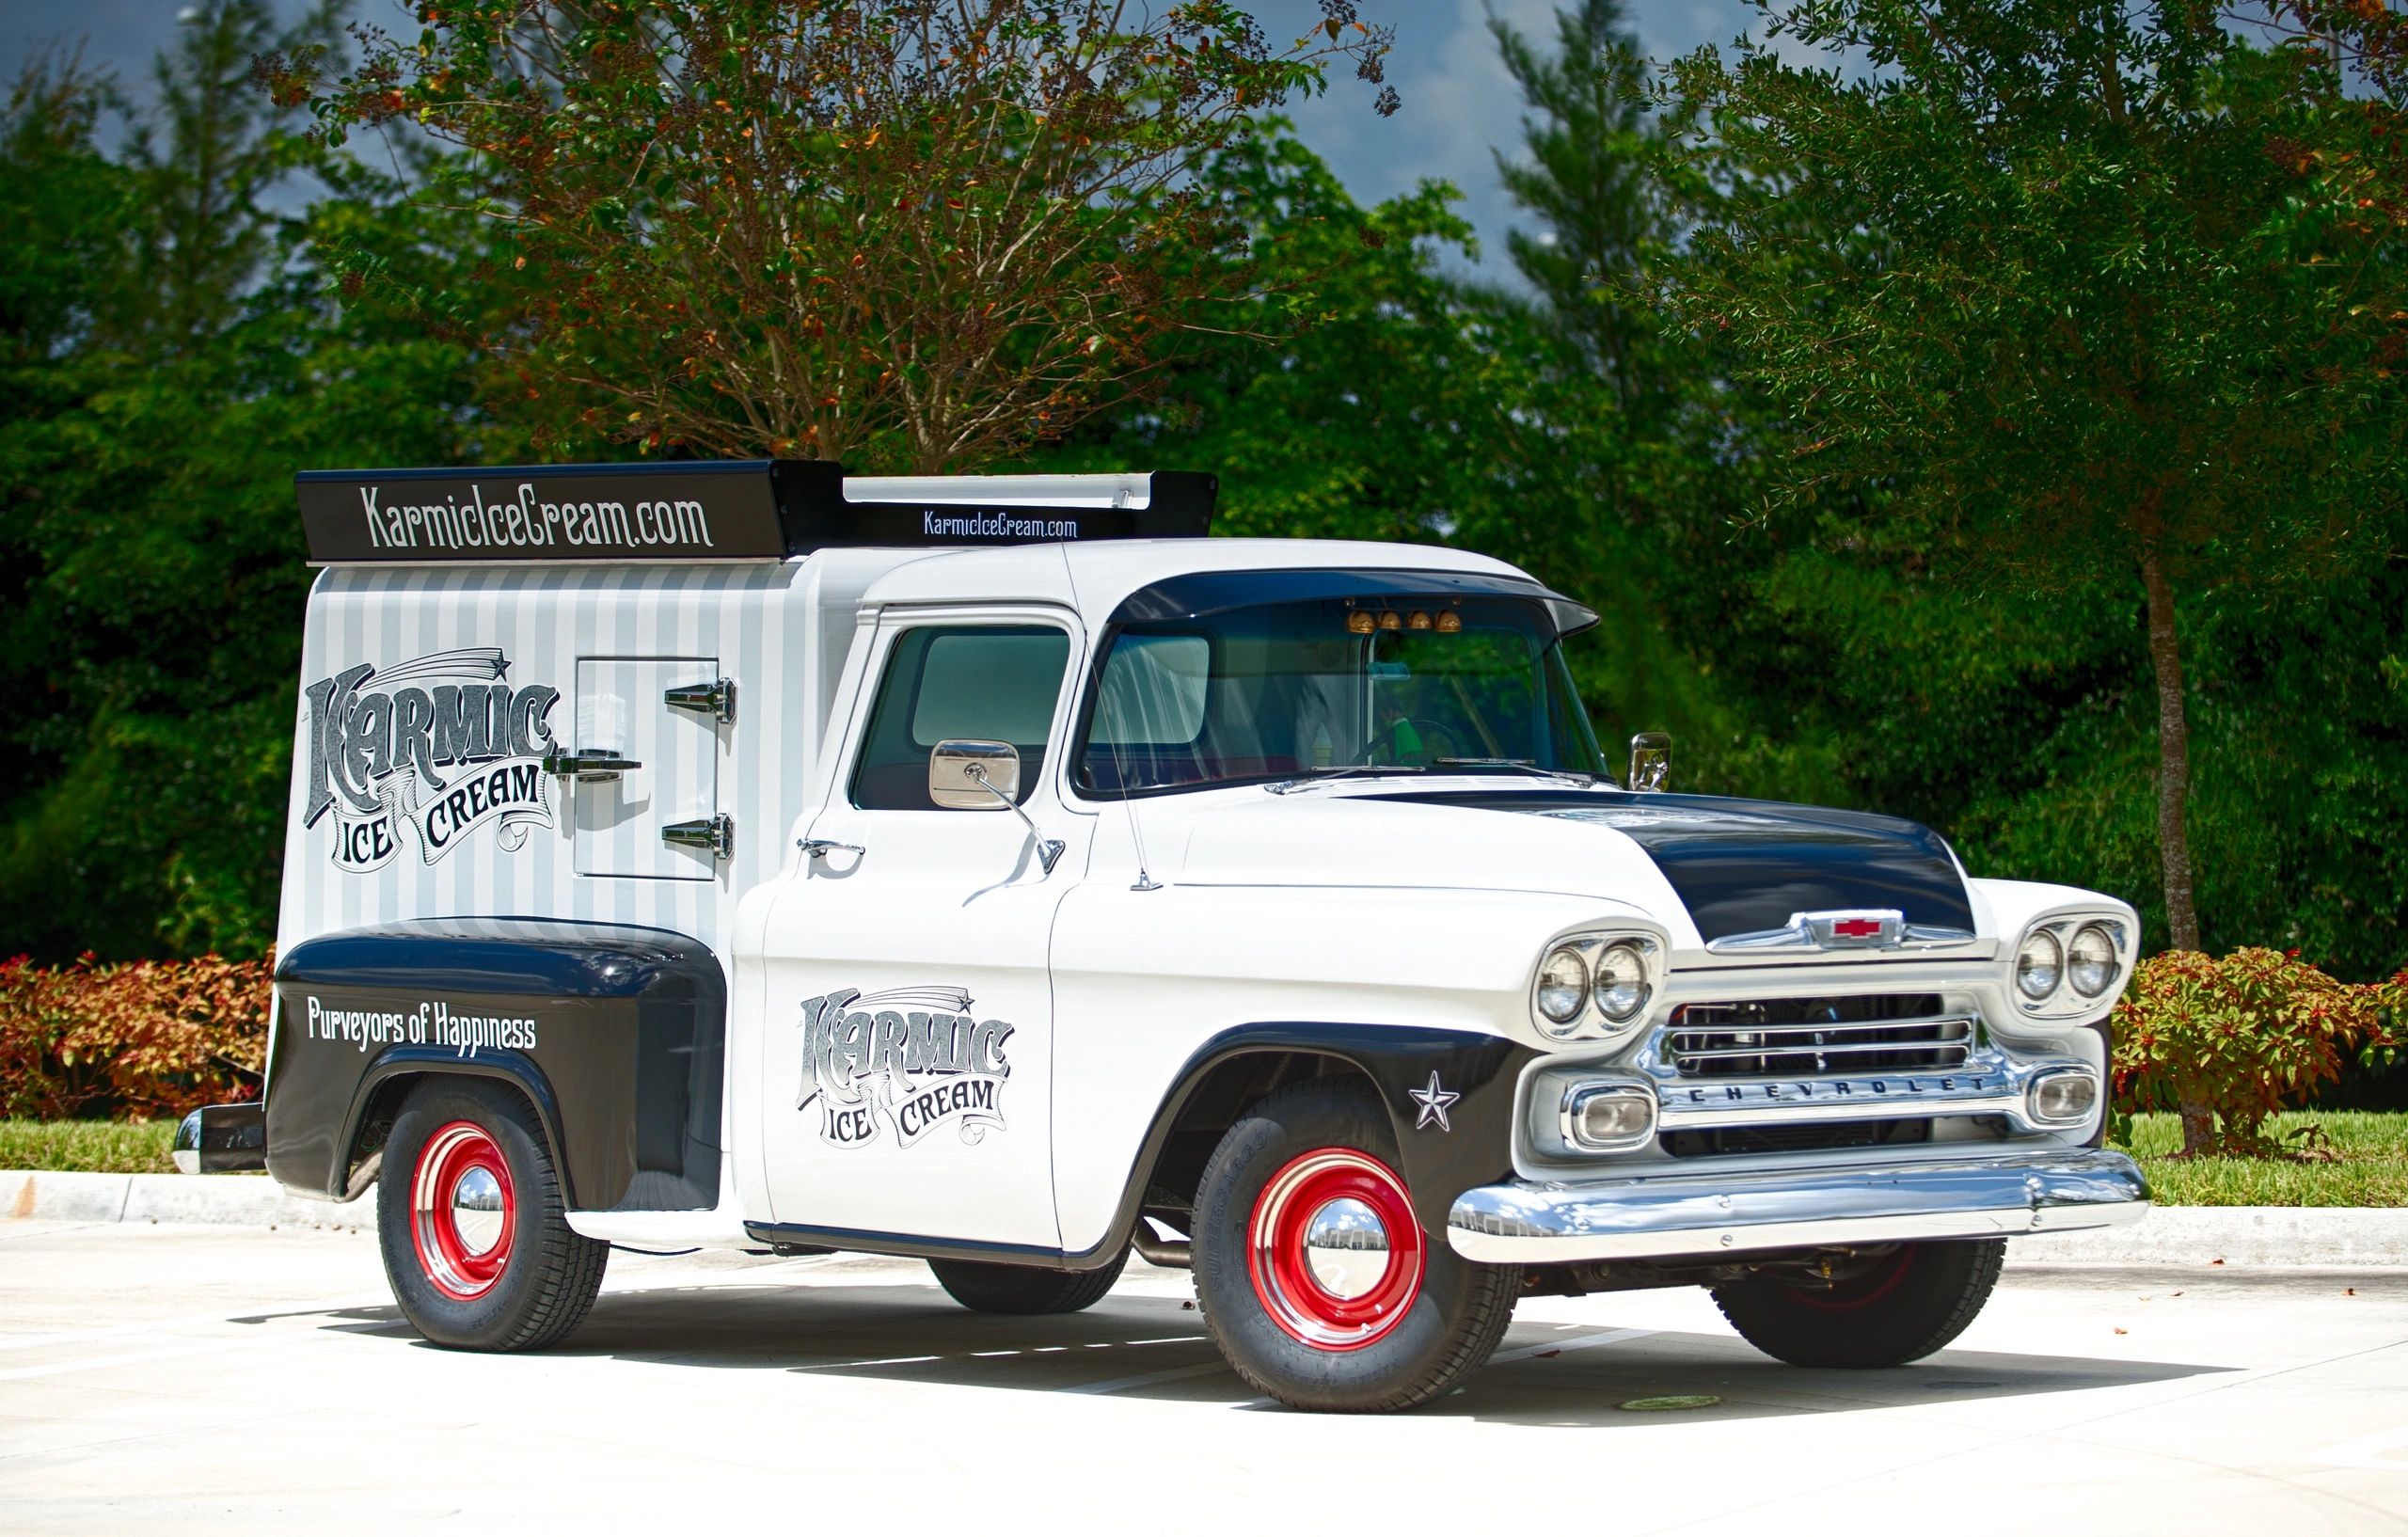 1958 Chevy Ice Cream truck rental in Broward County